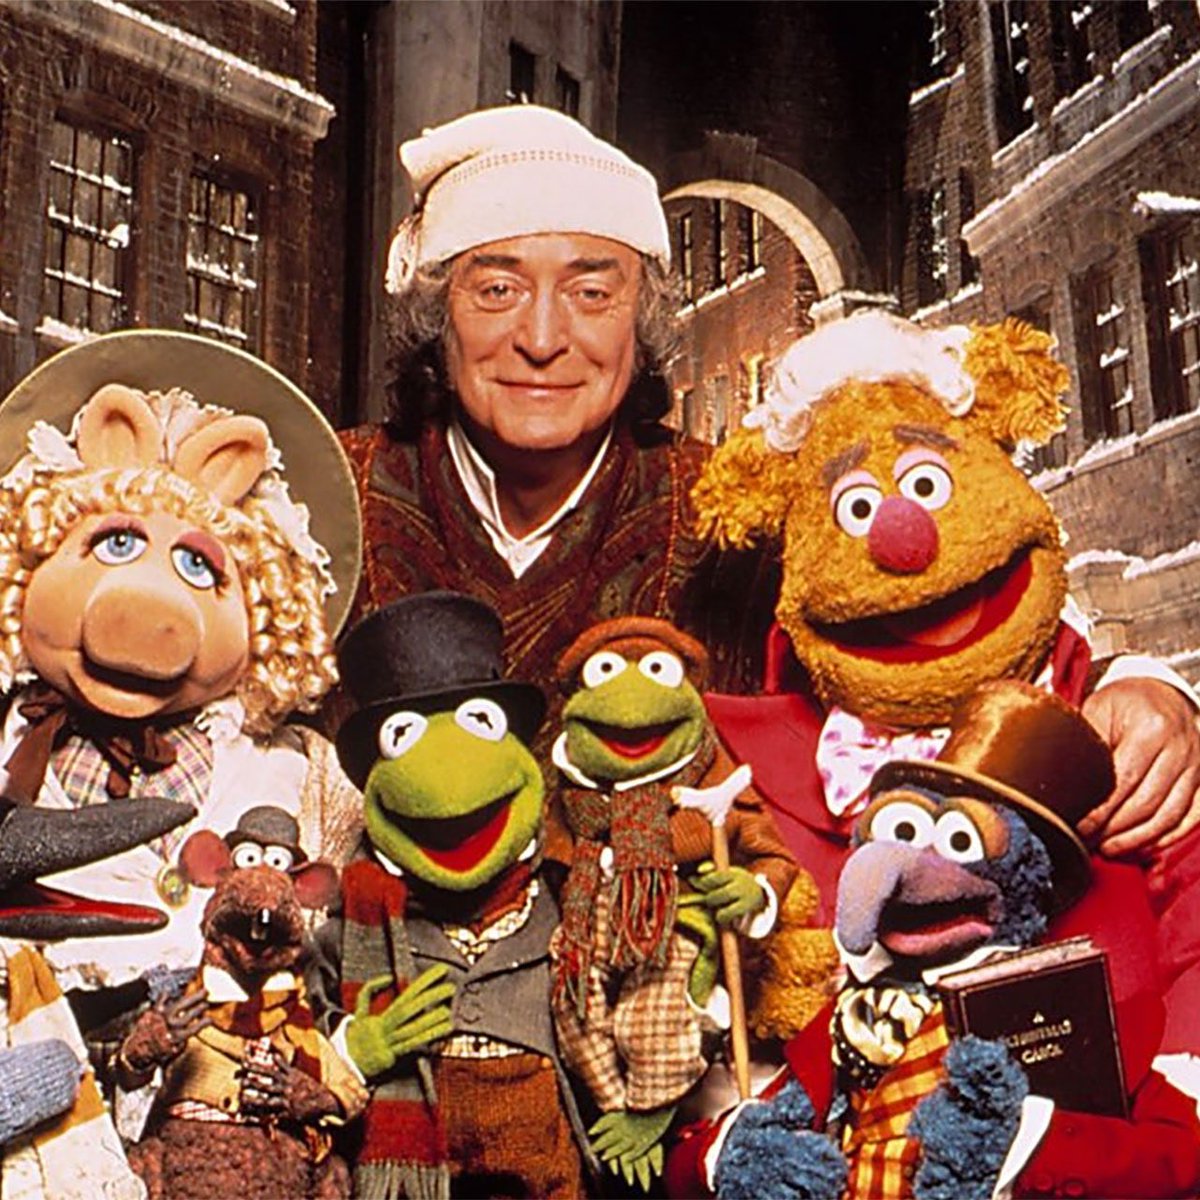 This mornings Christmas entertainment at the cinema ❤️ #MuppetChristmasCarol #ChristmasMovie